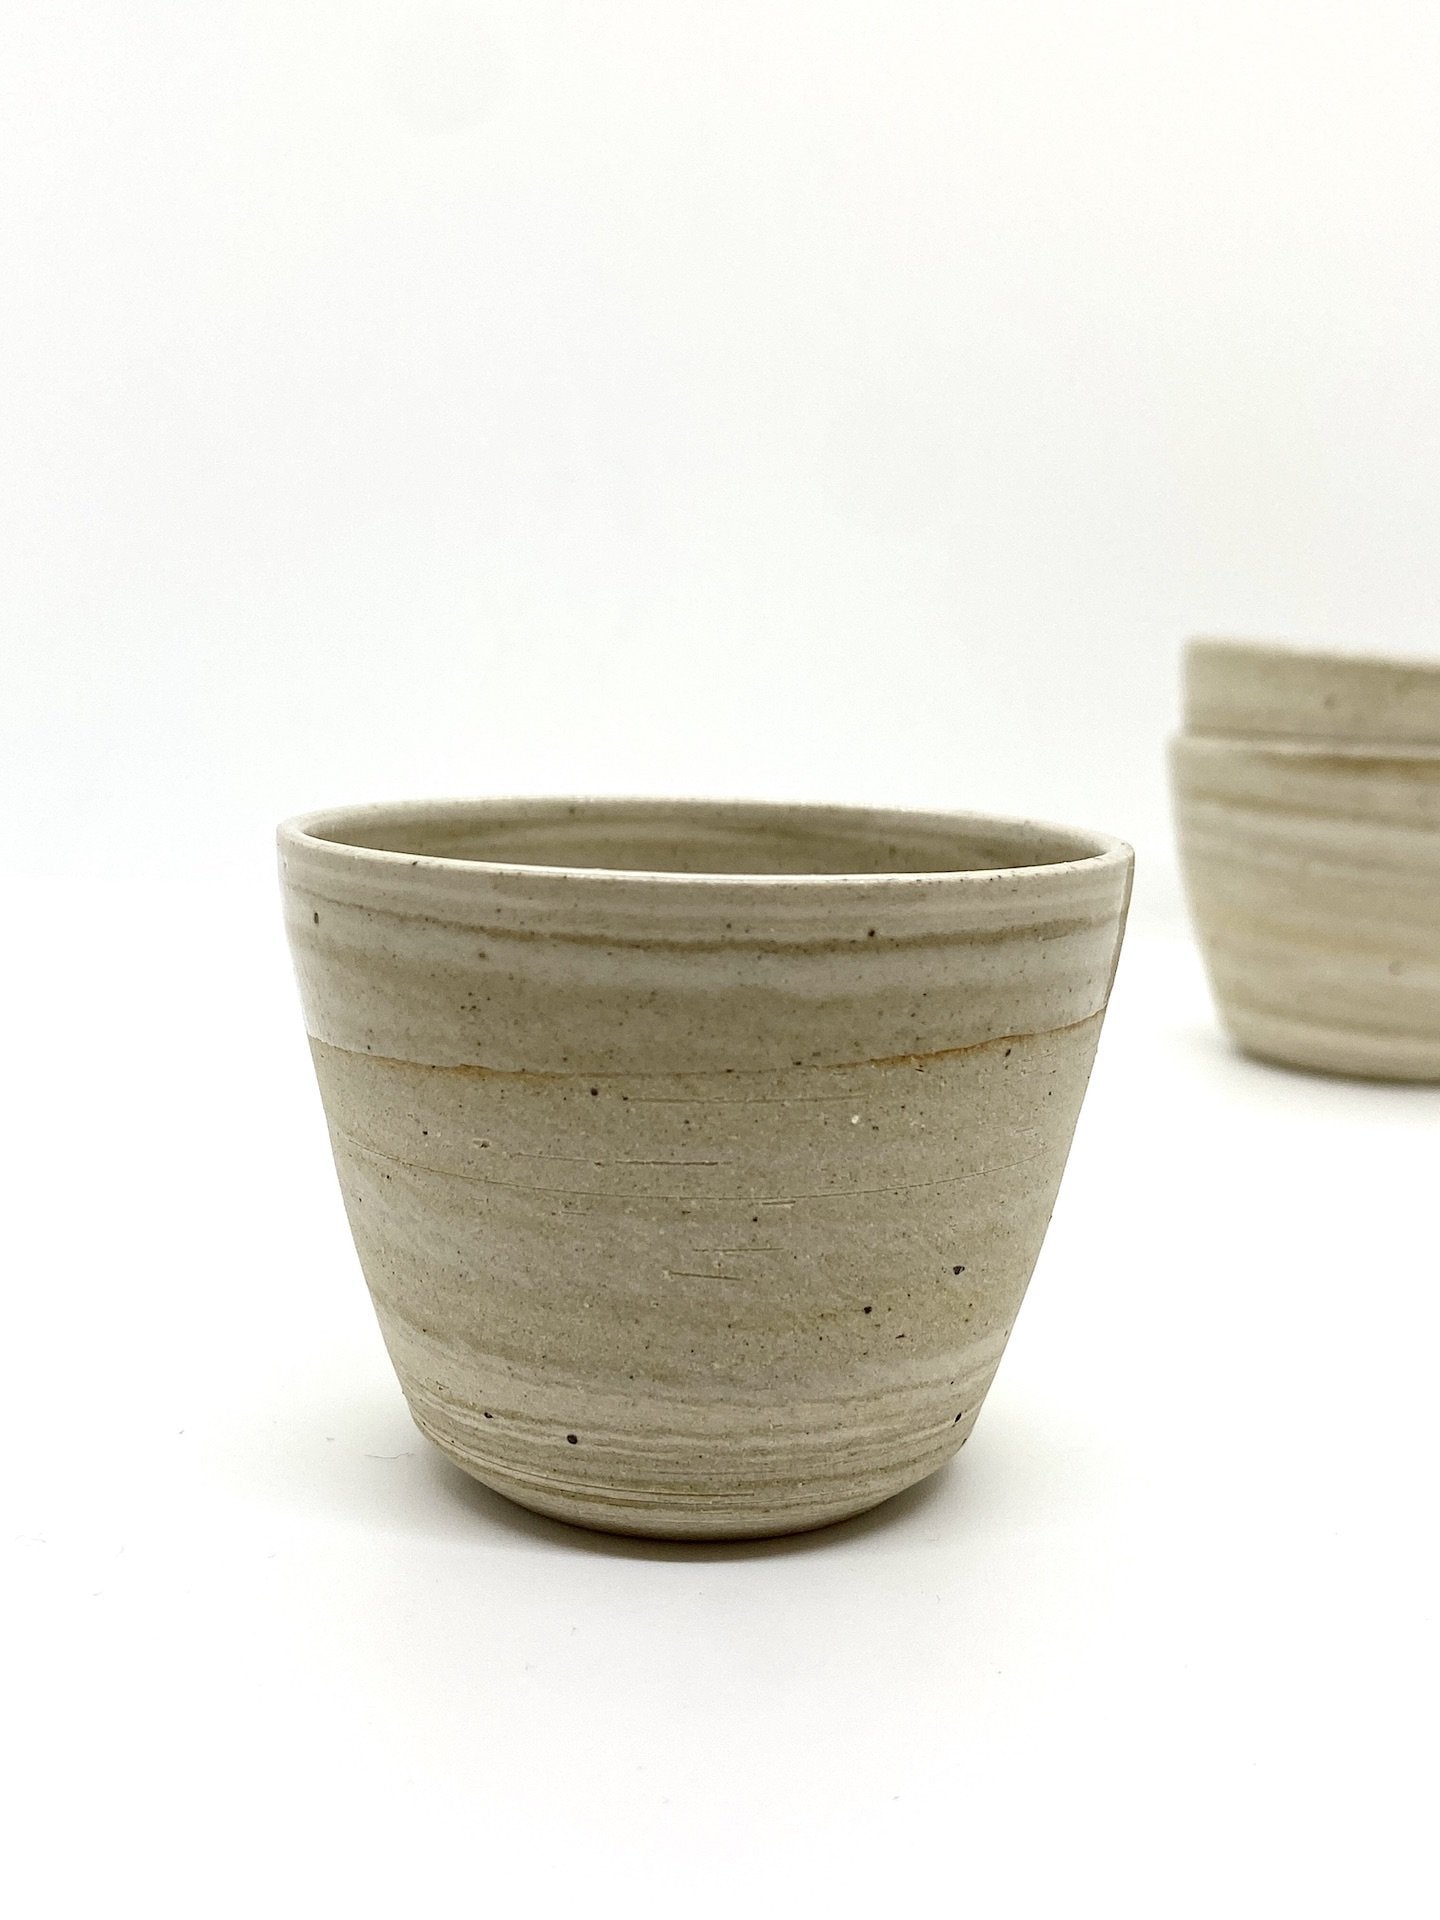 Small Cup | Handleless | #3SC | Espresso Size | Ceramic | by Emporium Julium - Lifestory - Emporium Julium